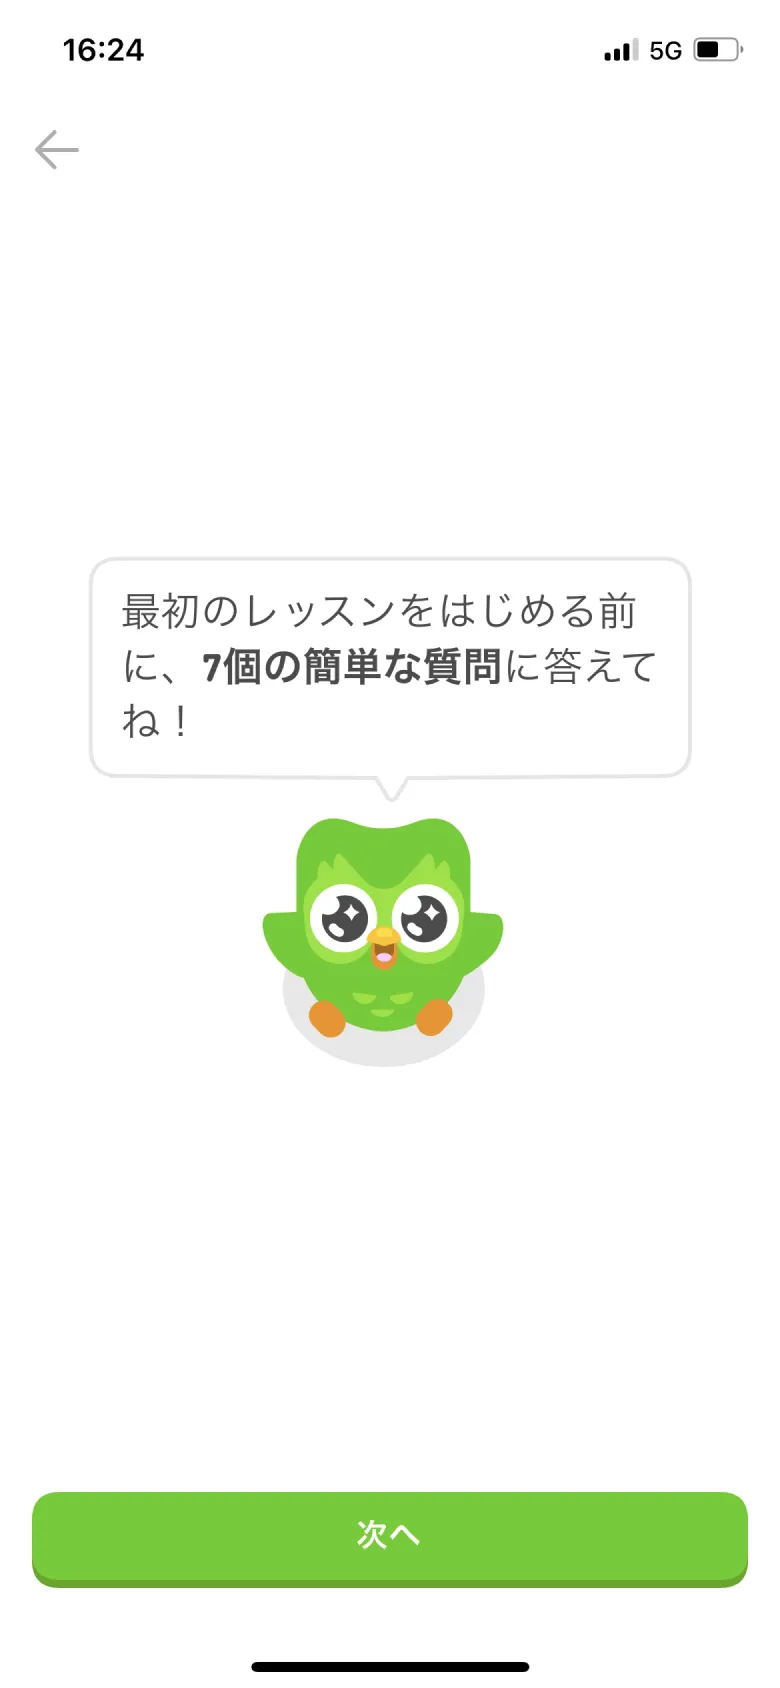 Duolingo オンボーディング screen